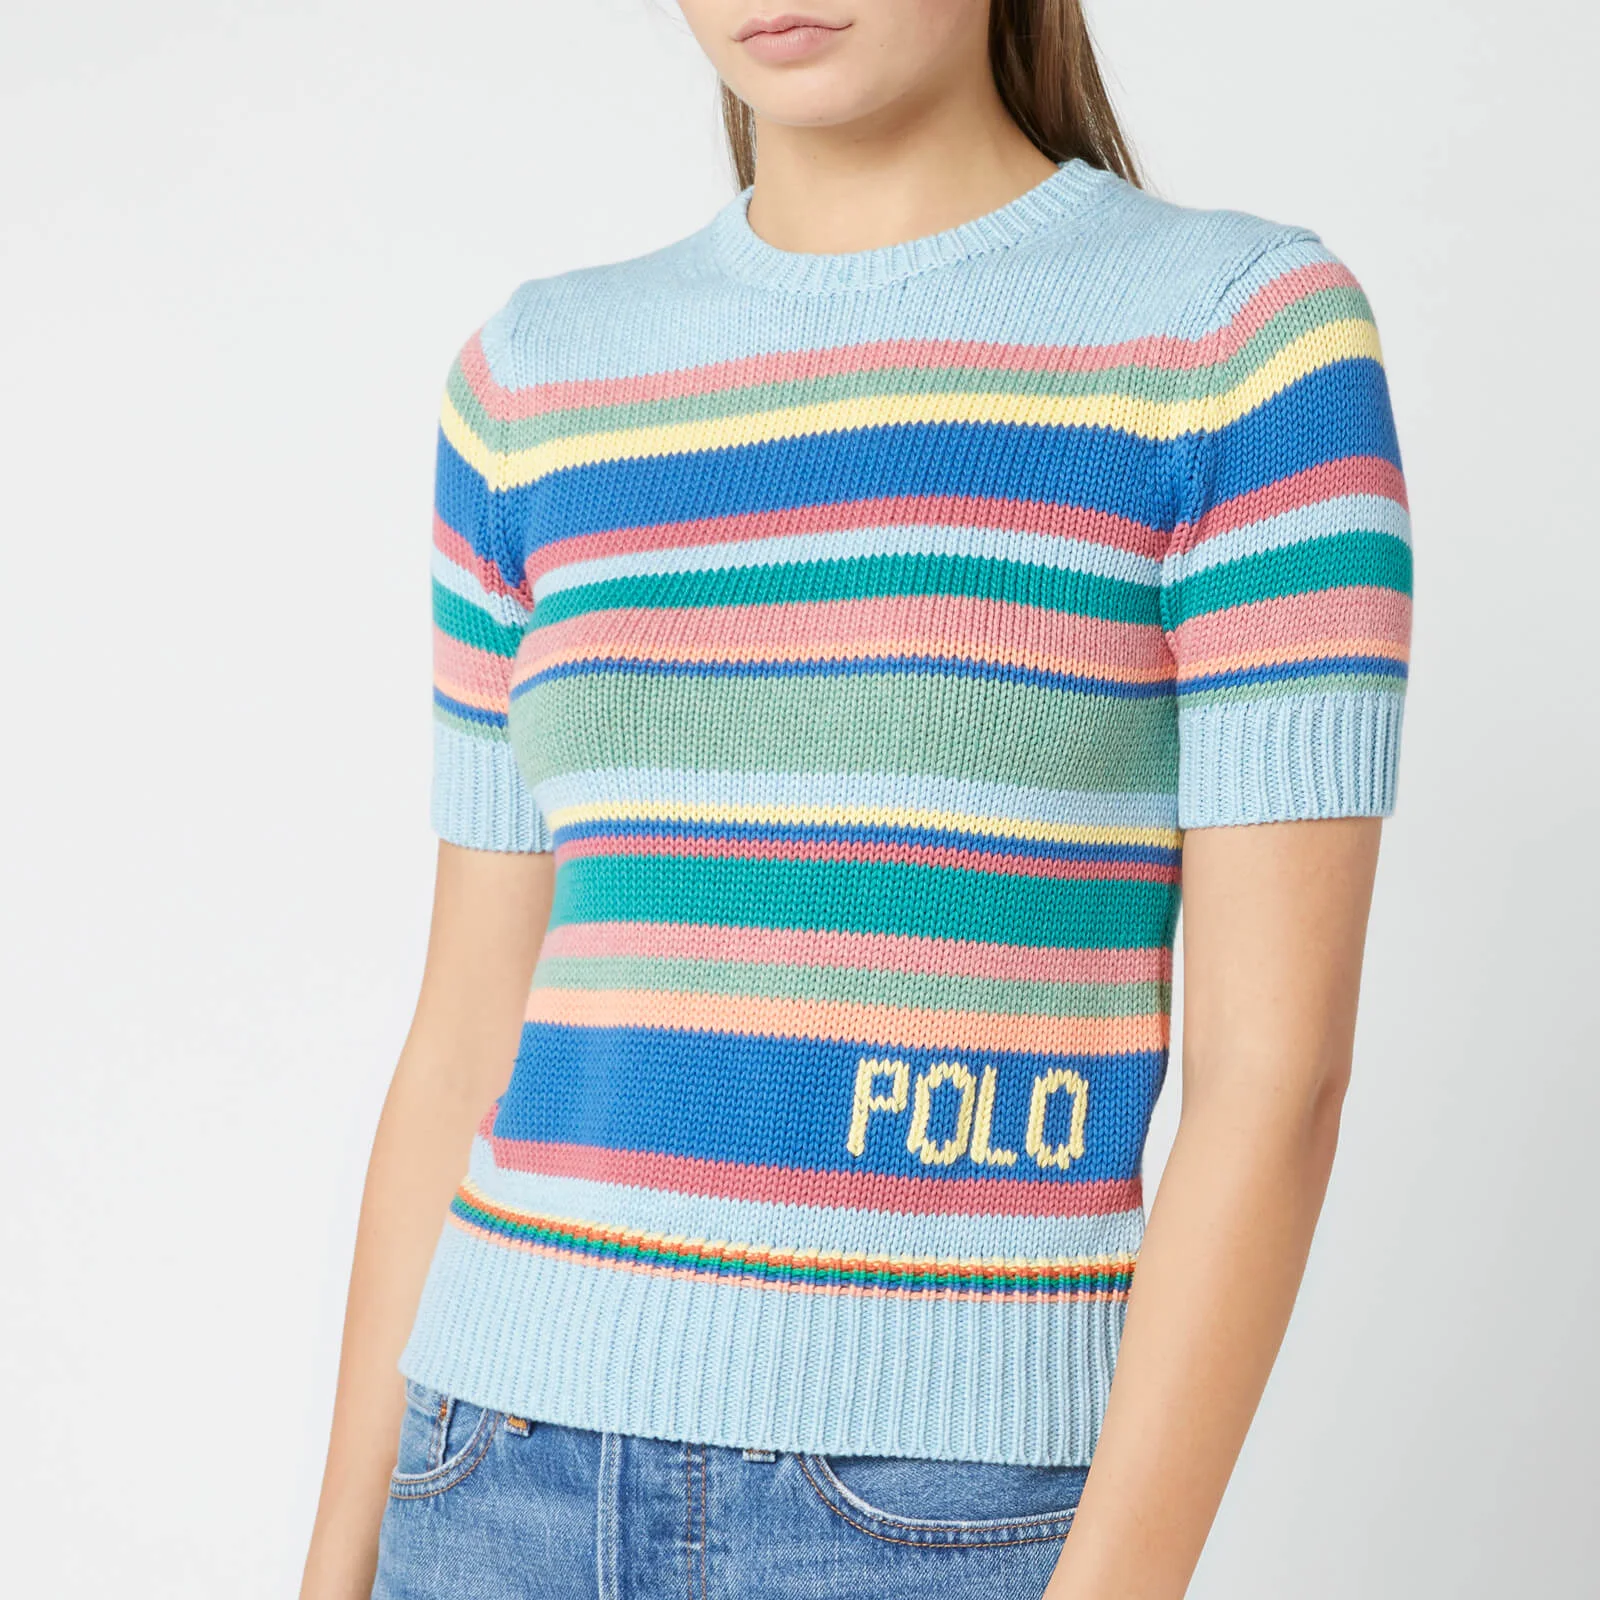 Polo Ralph Lauren Women's Short Sleeve Sweater - Blue Multi Image 1